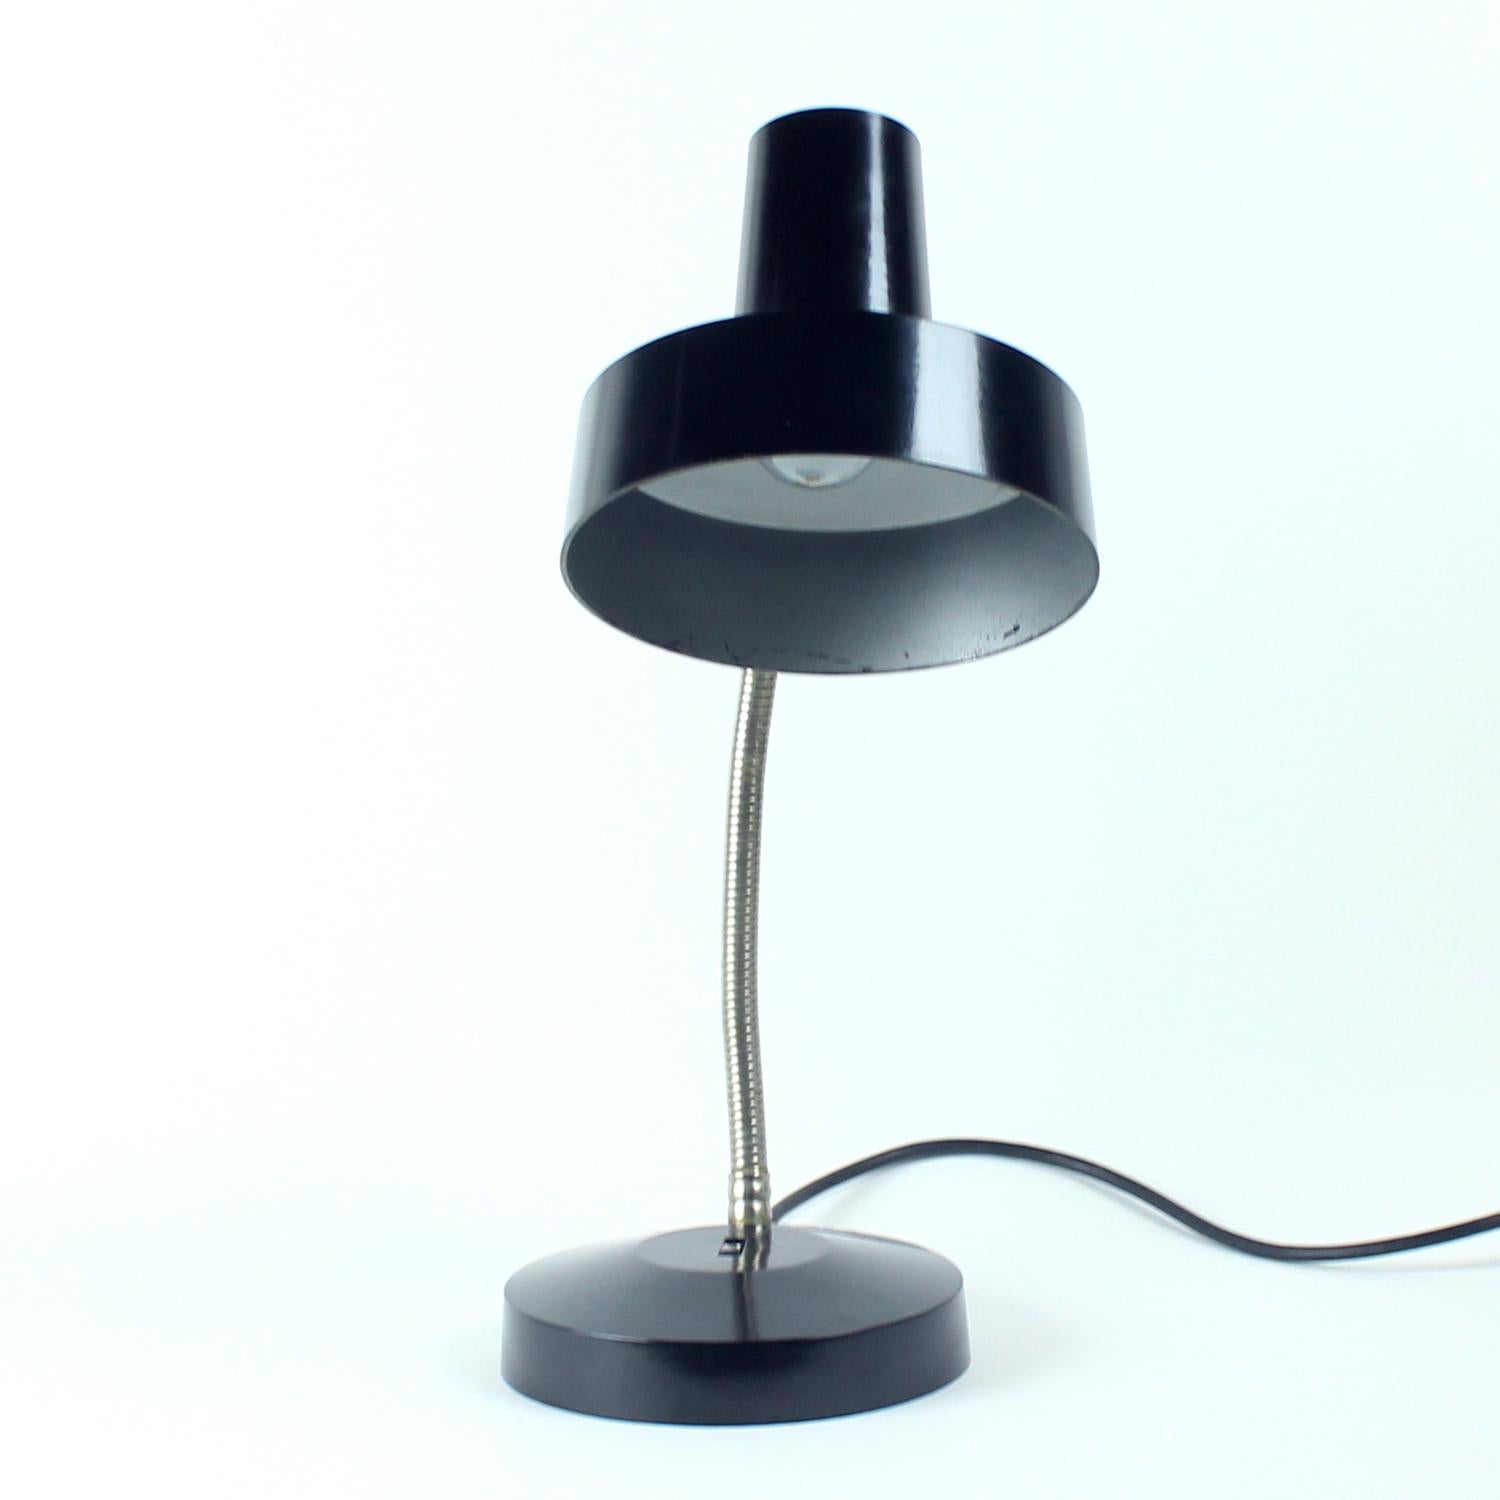 Mid-20th Century Black Bakelite Table Lamp By Elektrosvit, Type 101301, Czechoslovakia 1960s For Sale